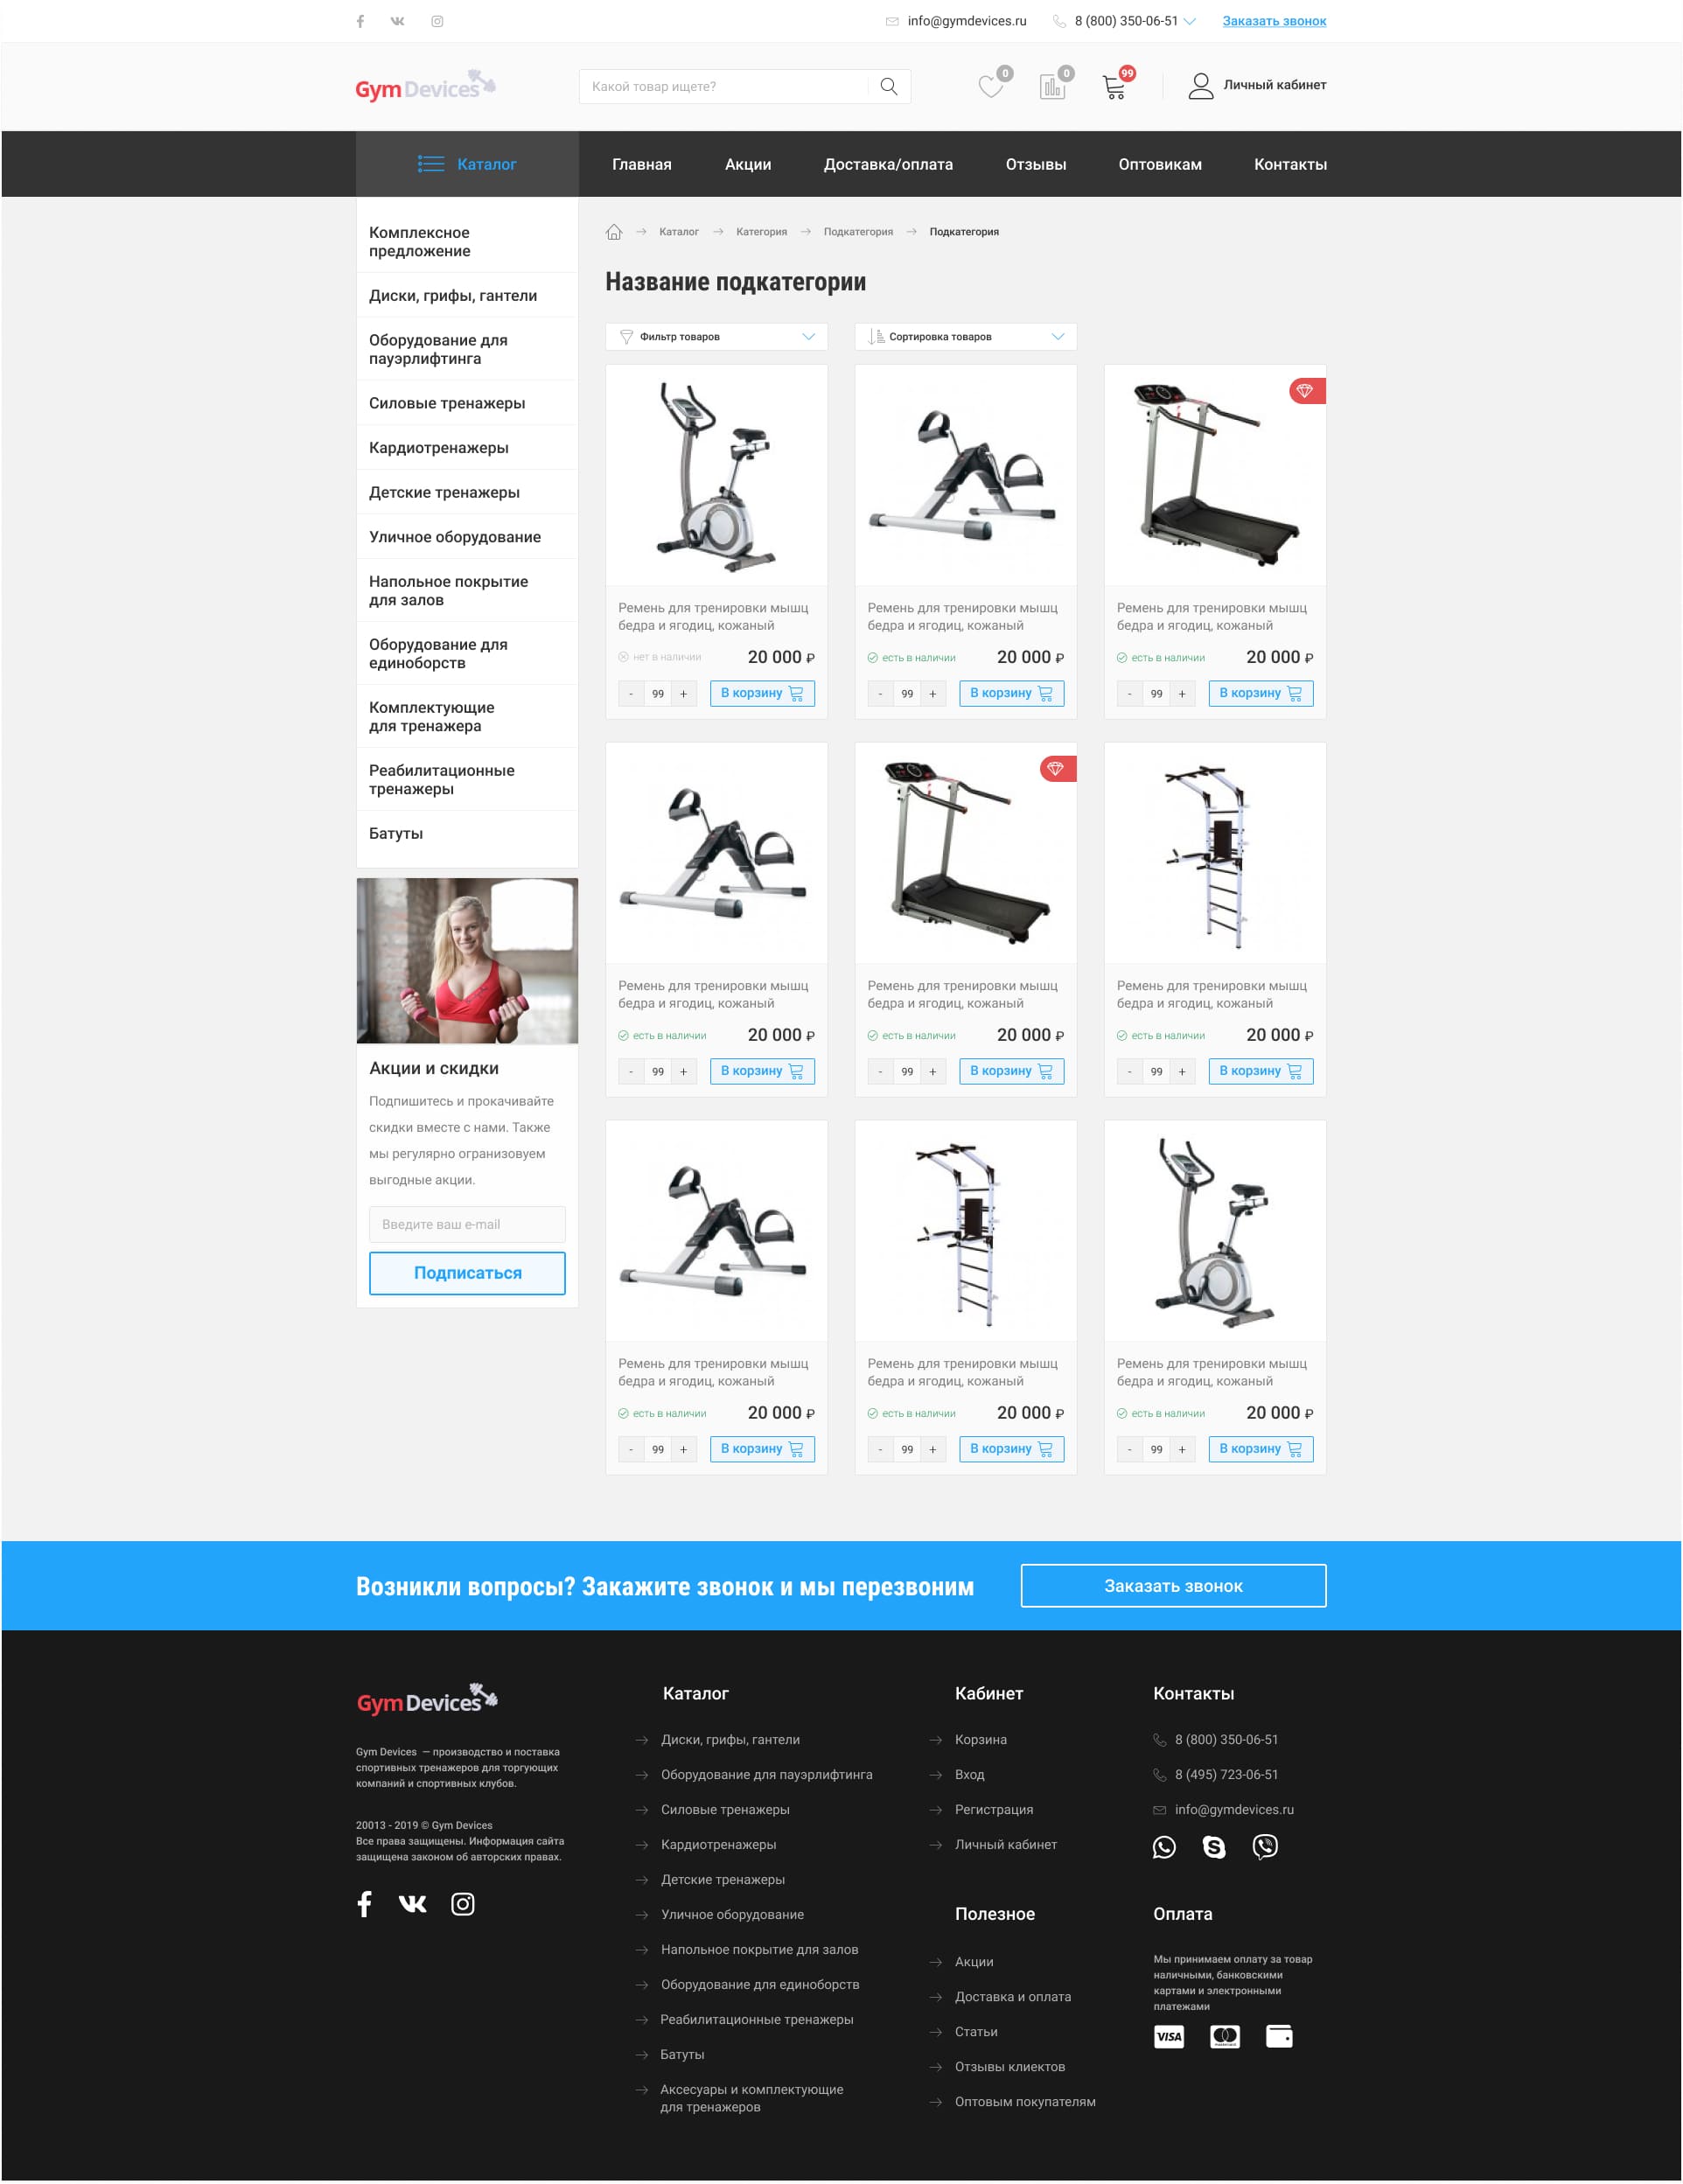 desktop version of catalog page for gym devices designed by Dima Radushev